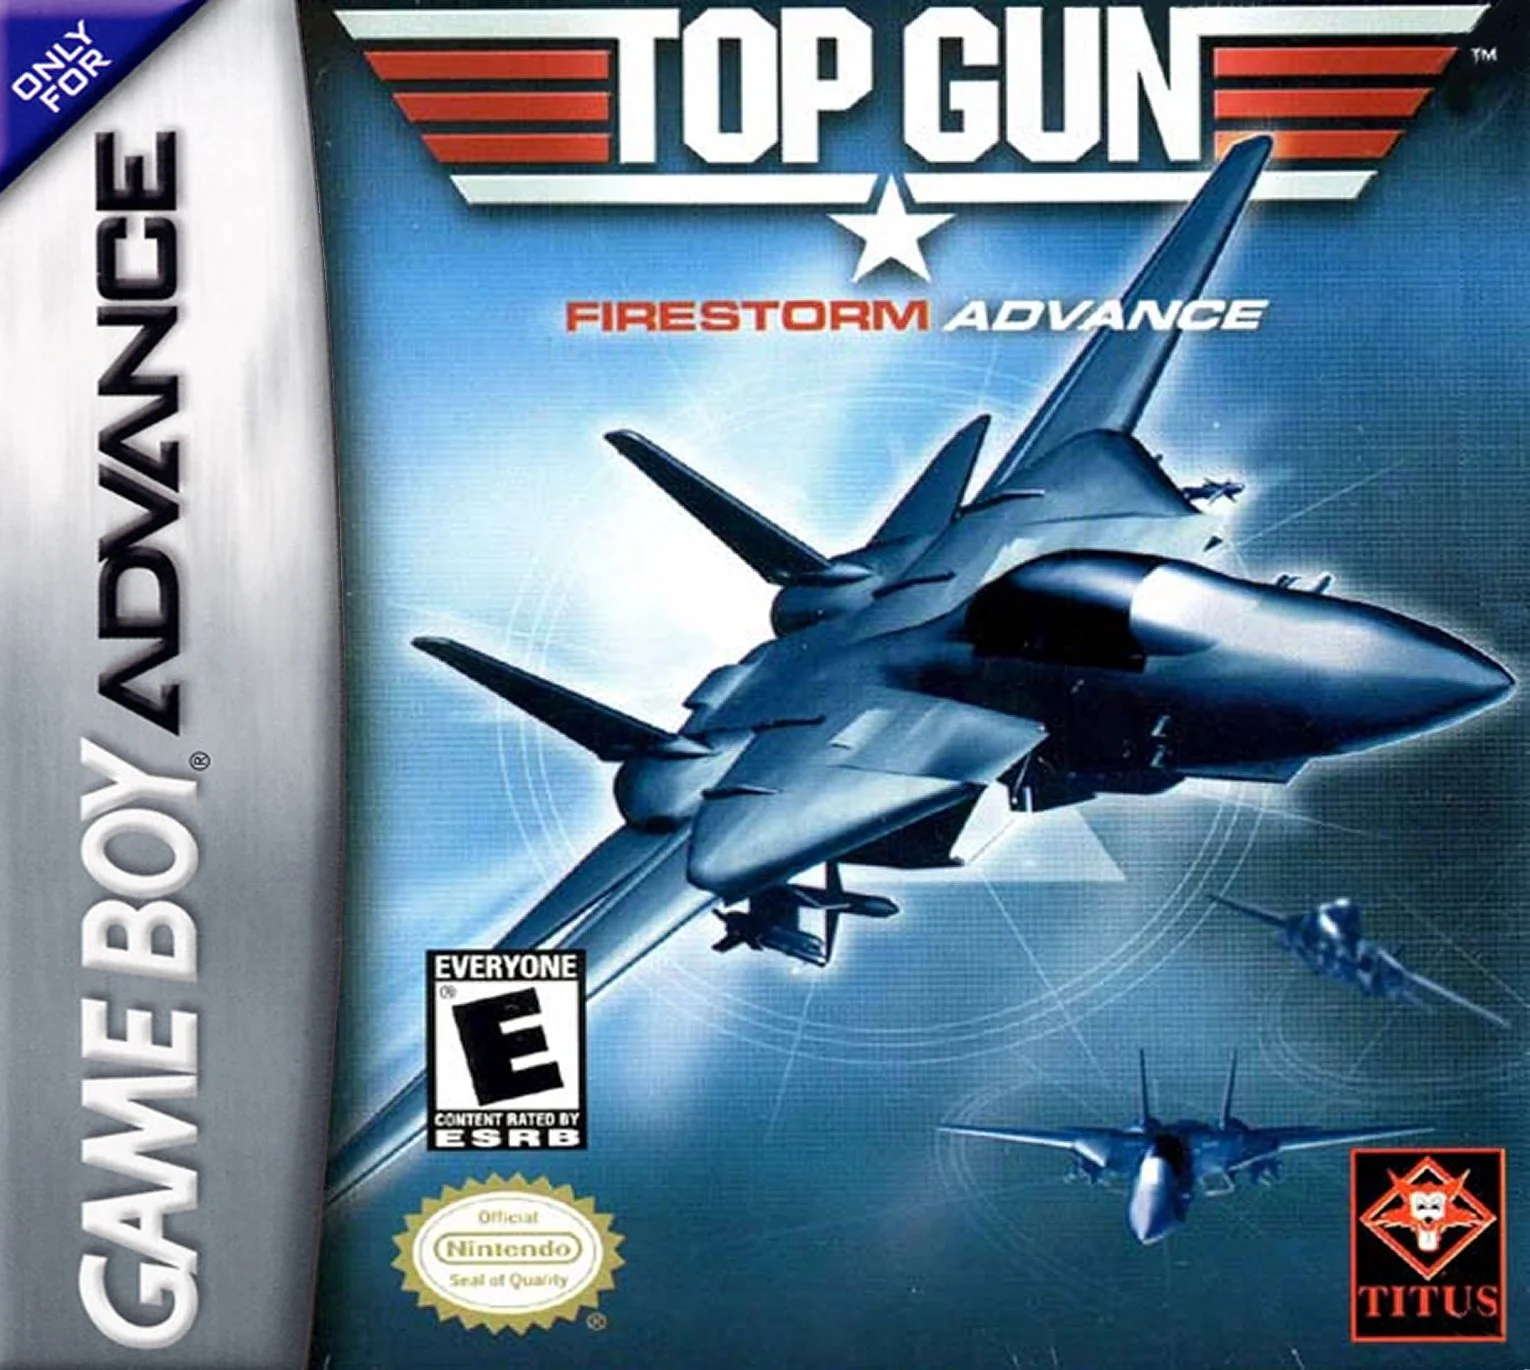 Топ ган игра. Top Gun игра. Top Gun: Firestorm. Top Gun Nintendo game. Top Gun авиасимулятор.